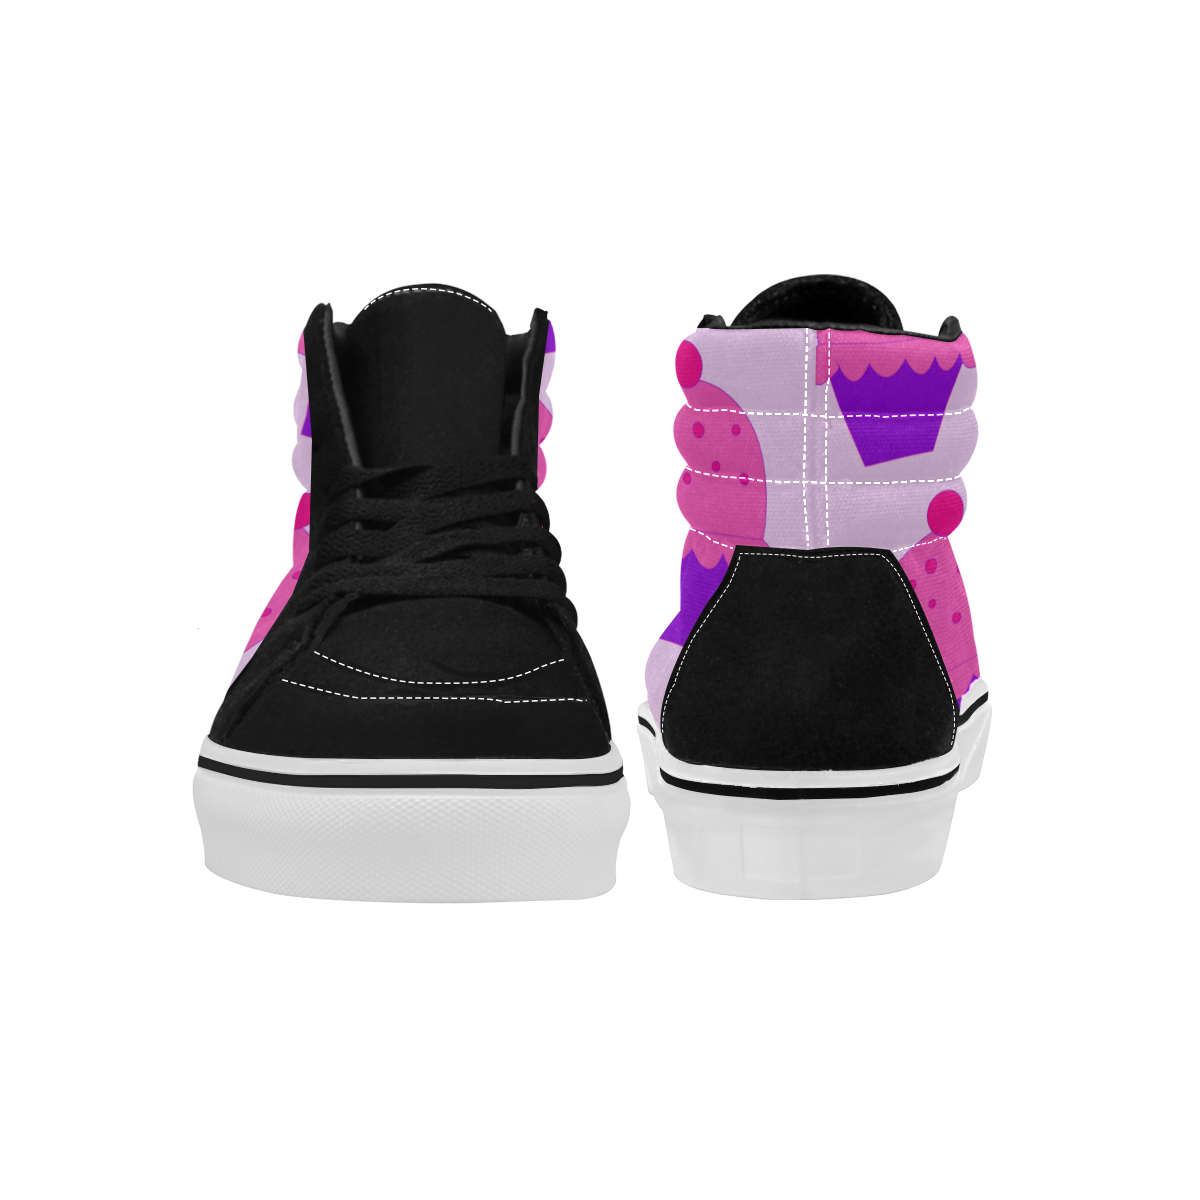 cupcakespink Women's High Top Skateboarding Shoes (Model E001-1)